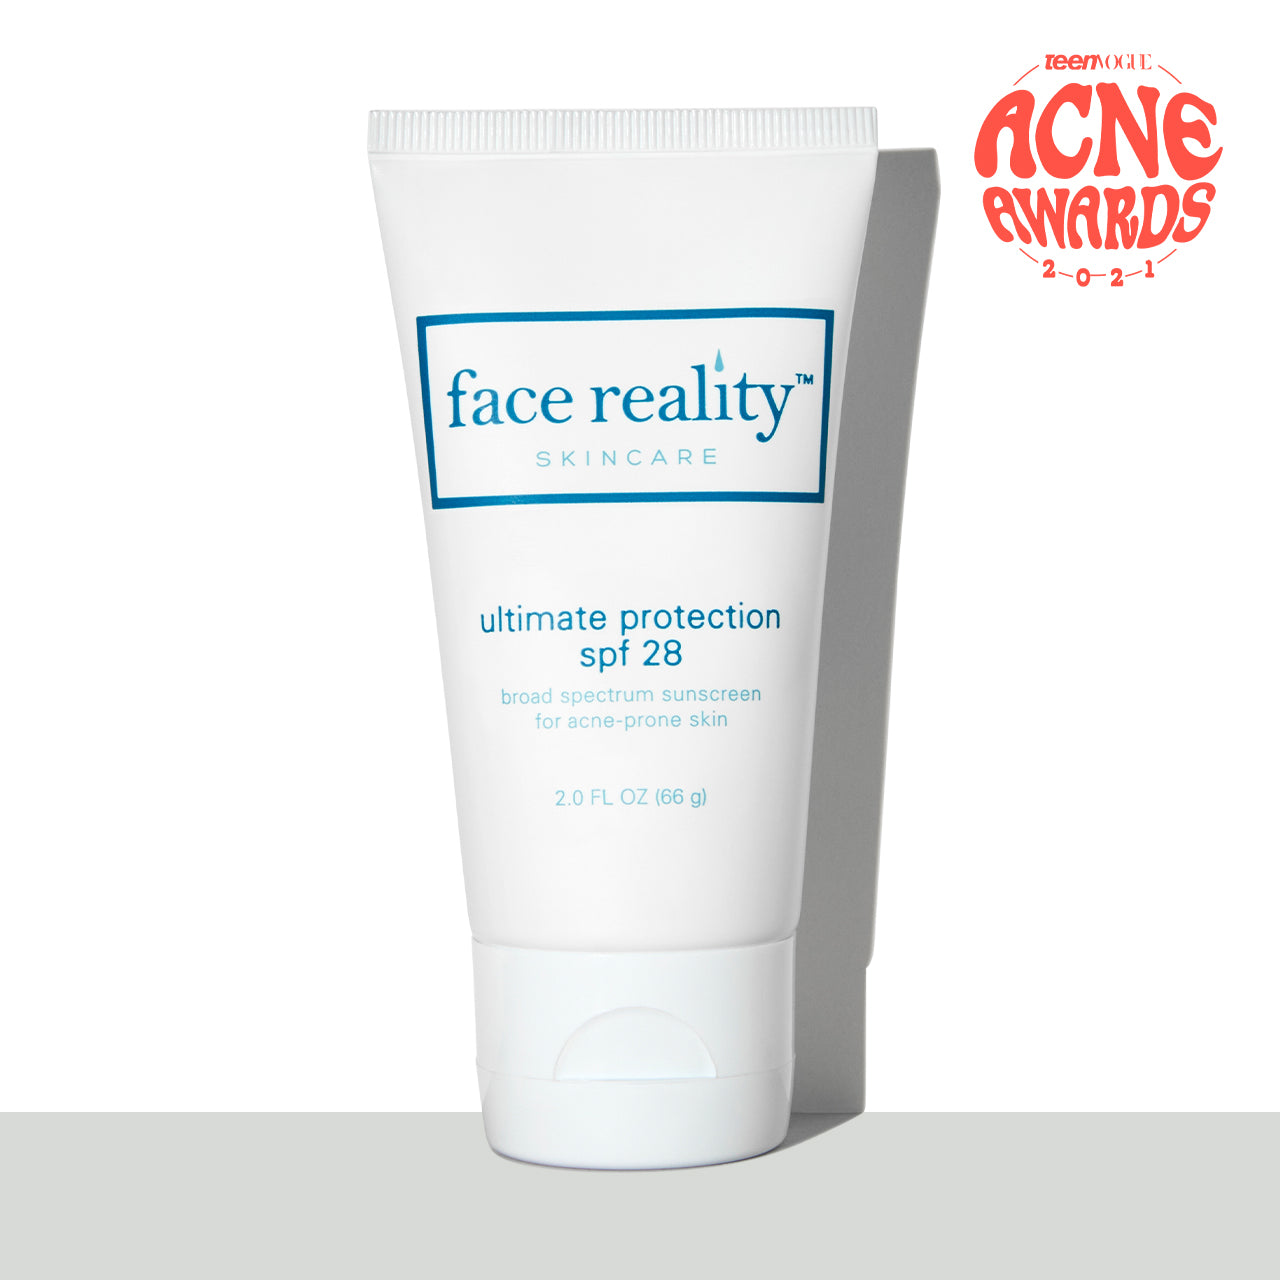 Sun Protection – Face Reality Skincare